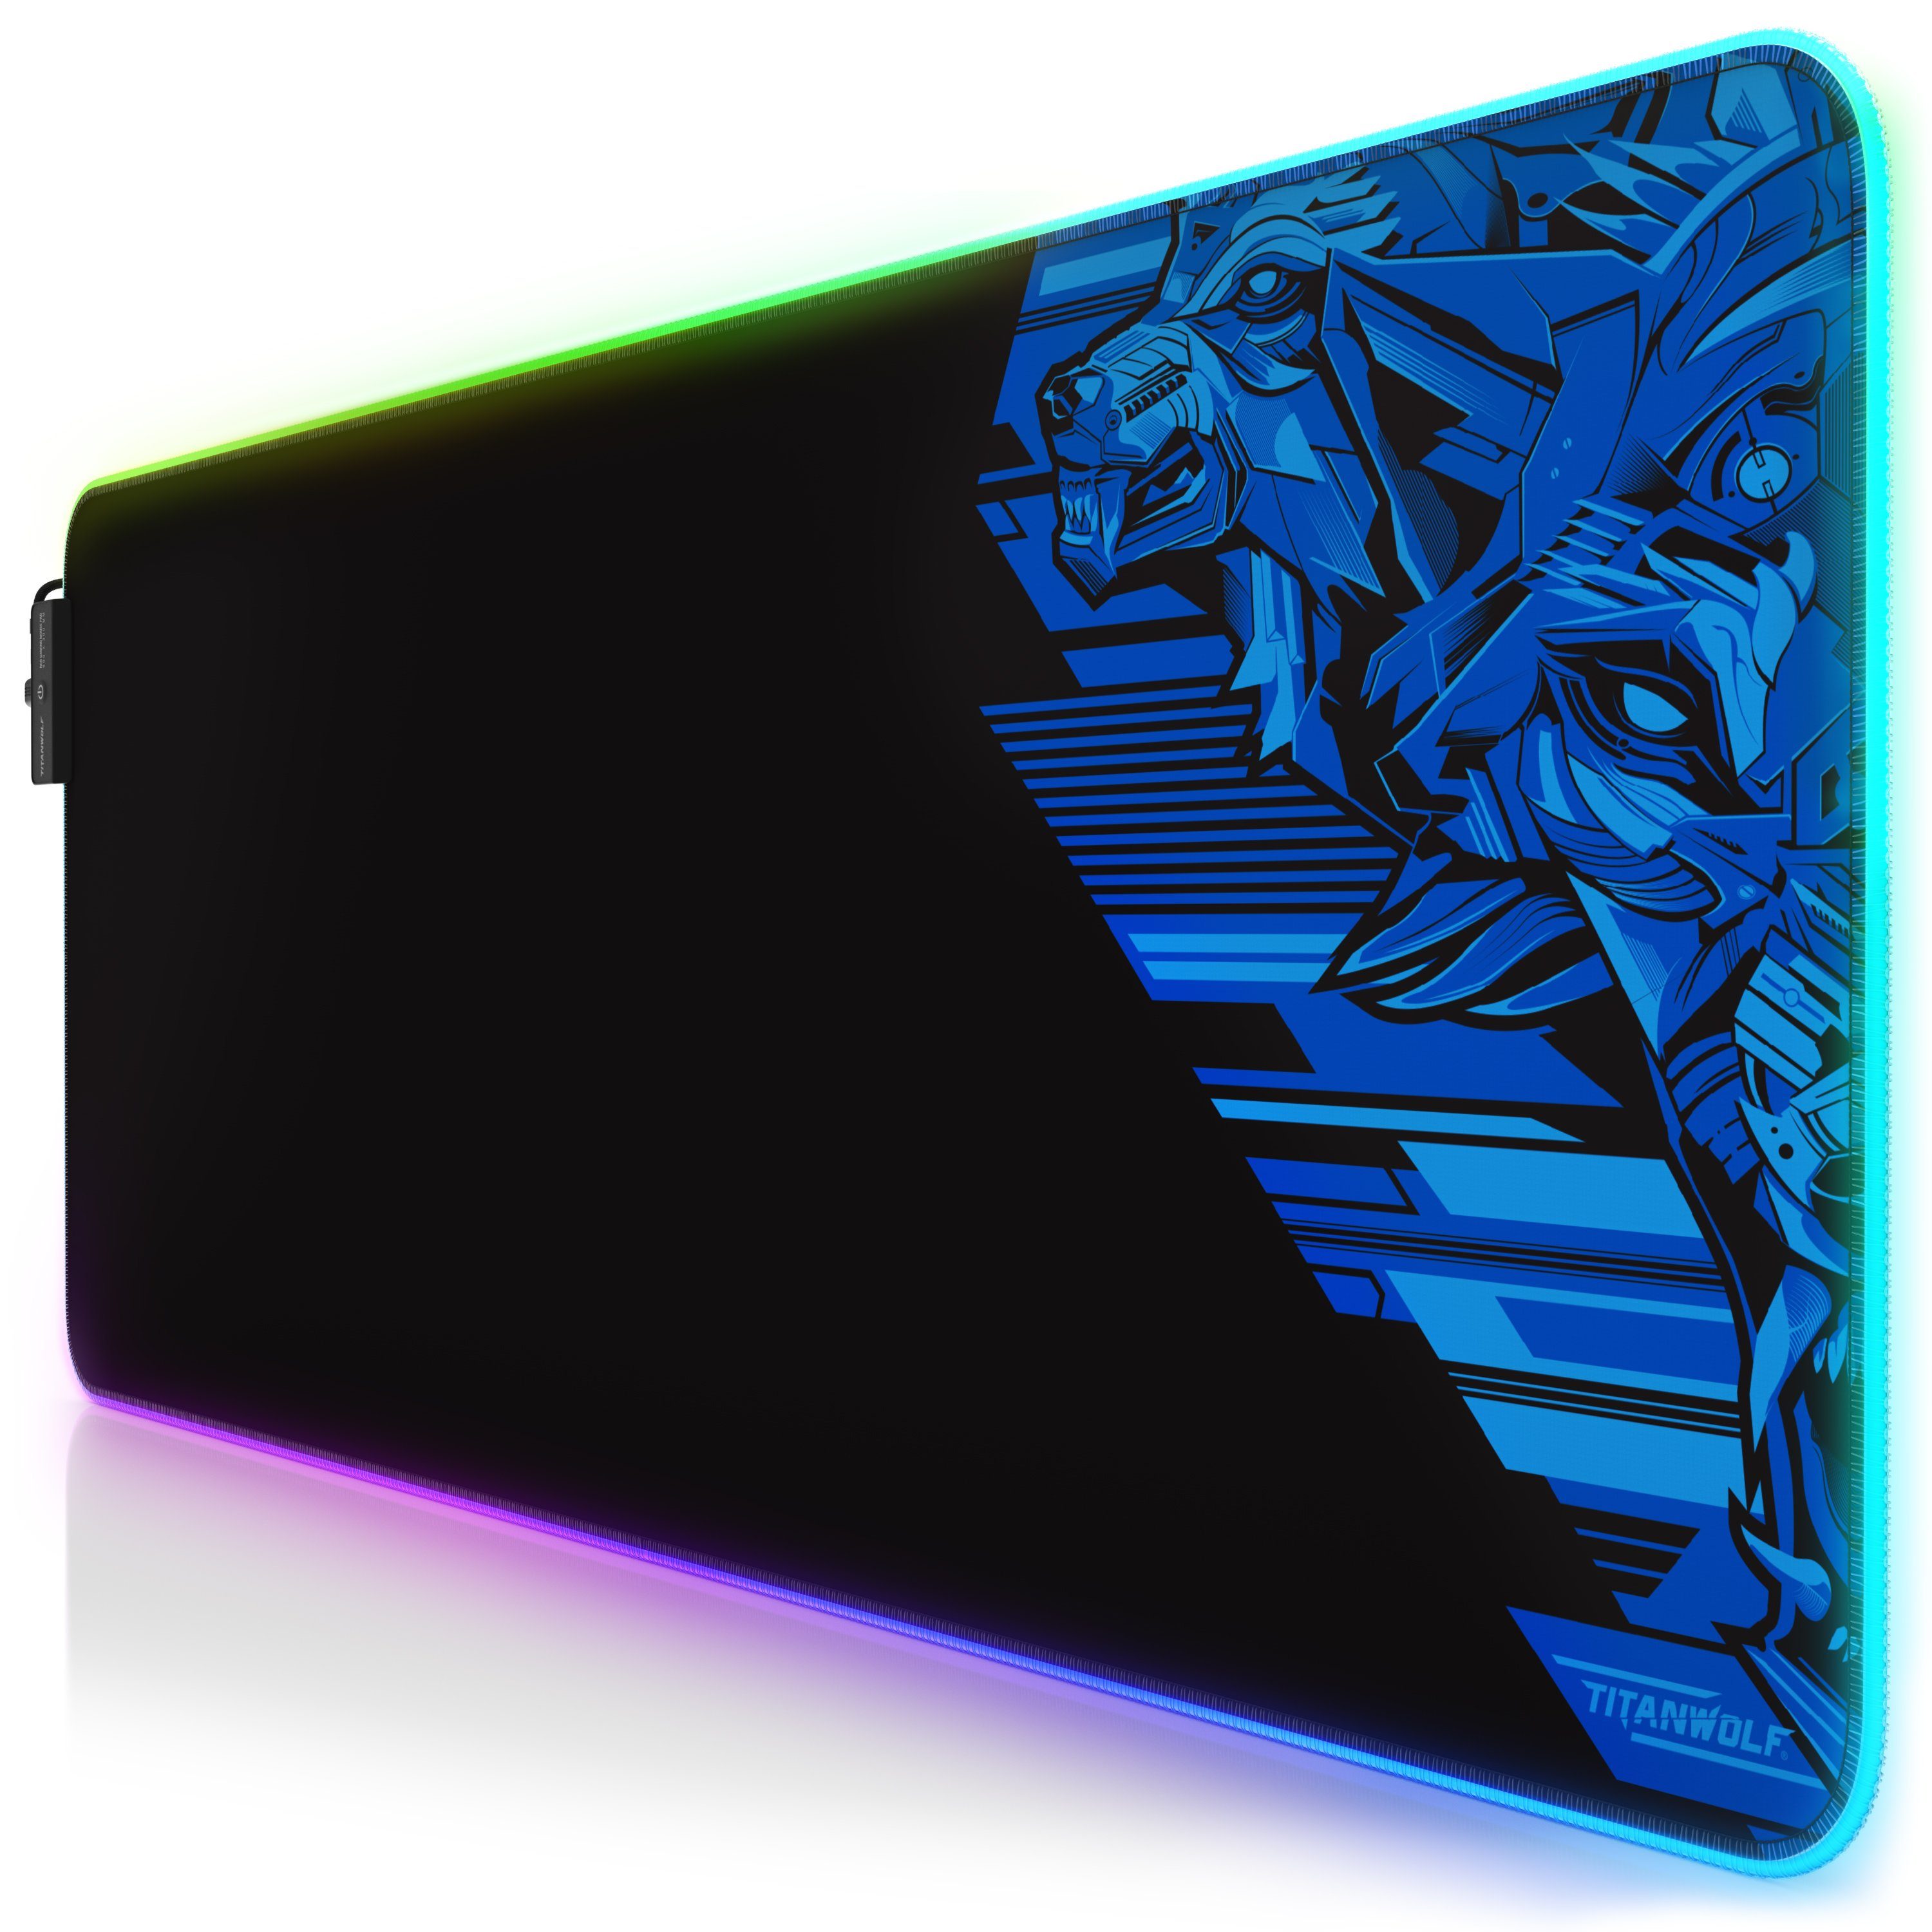 Titanwolf Gaming Mauspad, RGB Mousepad XL, 800 x 300 mm, verbessert  Präzision & Geschwindigkeit